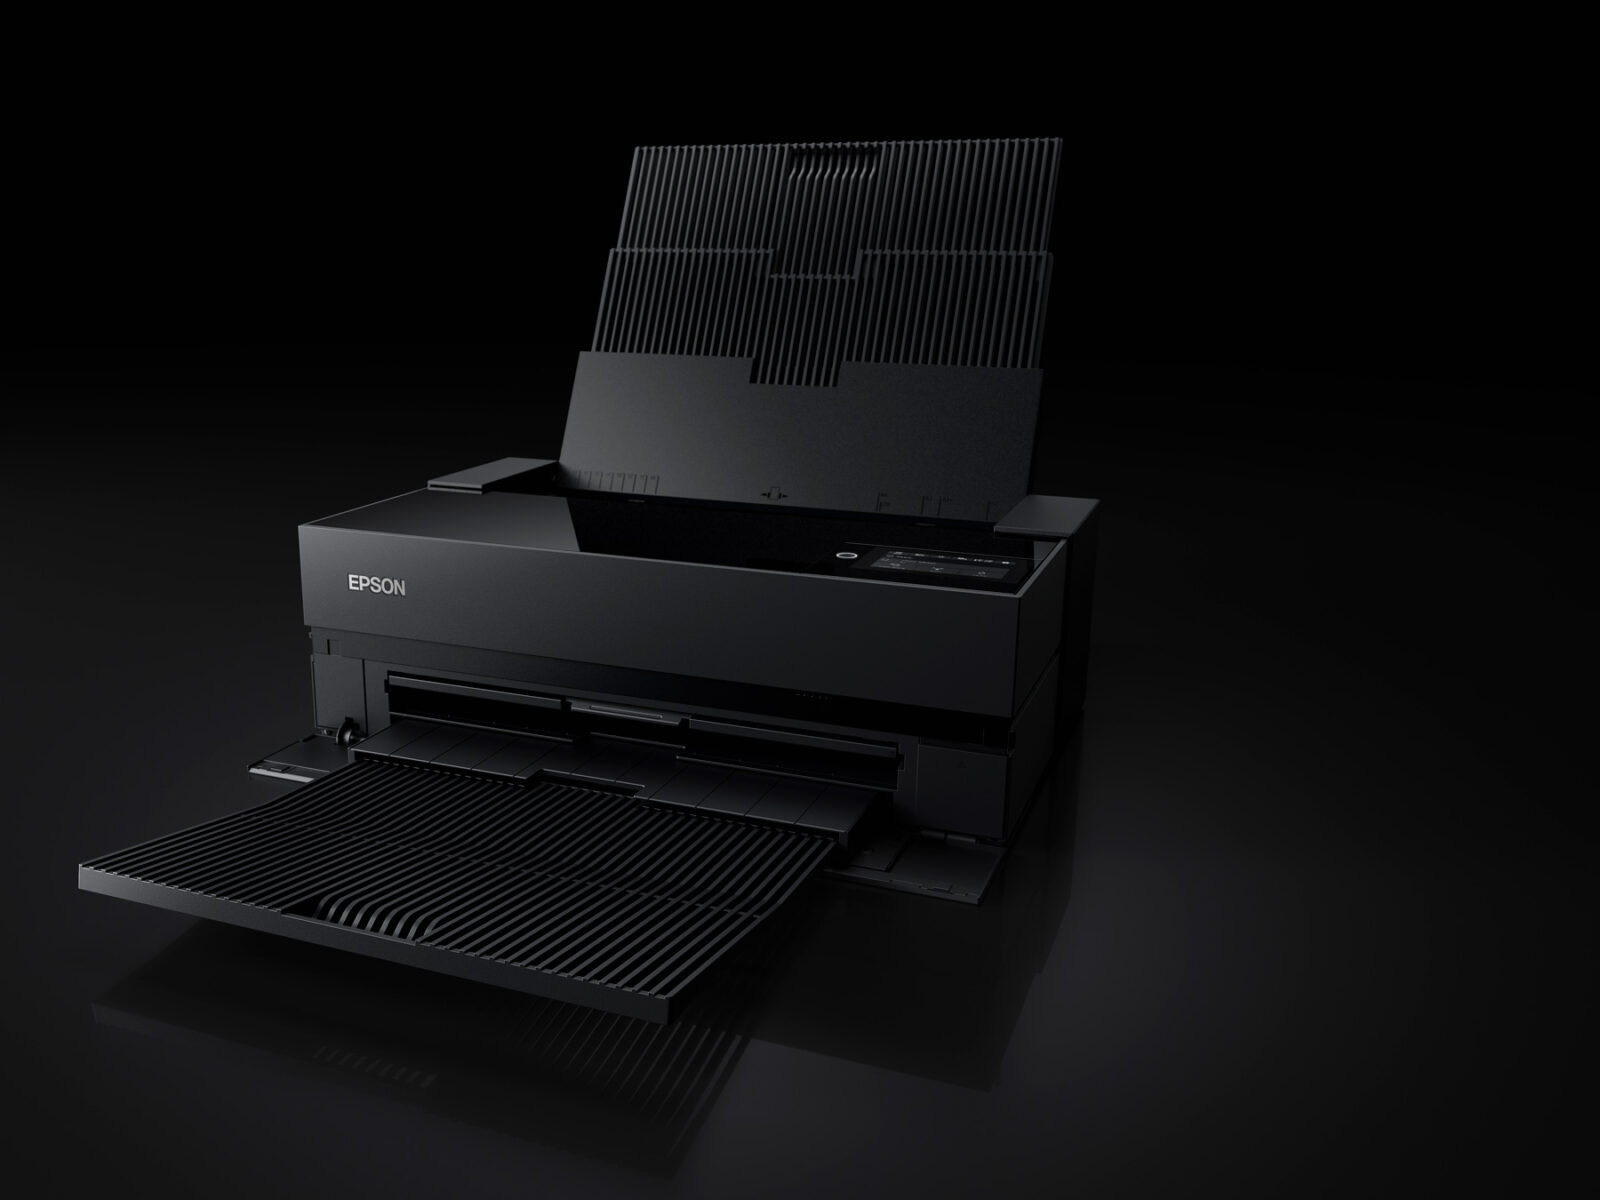 Epson P900 Printer Review Prints As Good As It Looks 5254